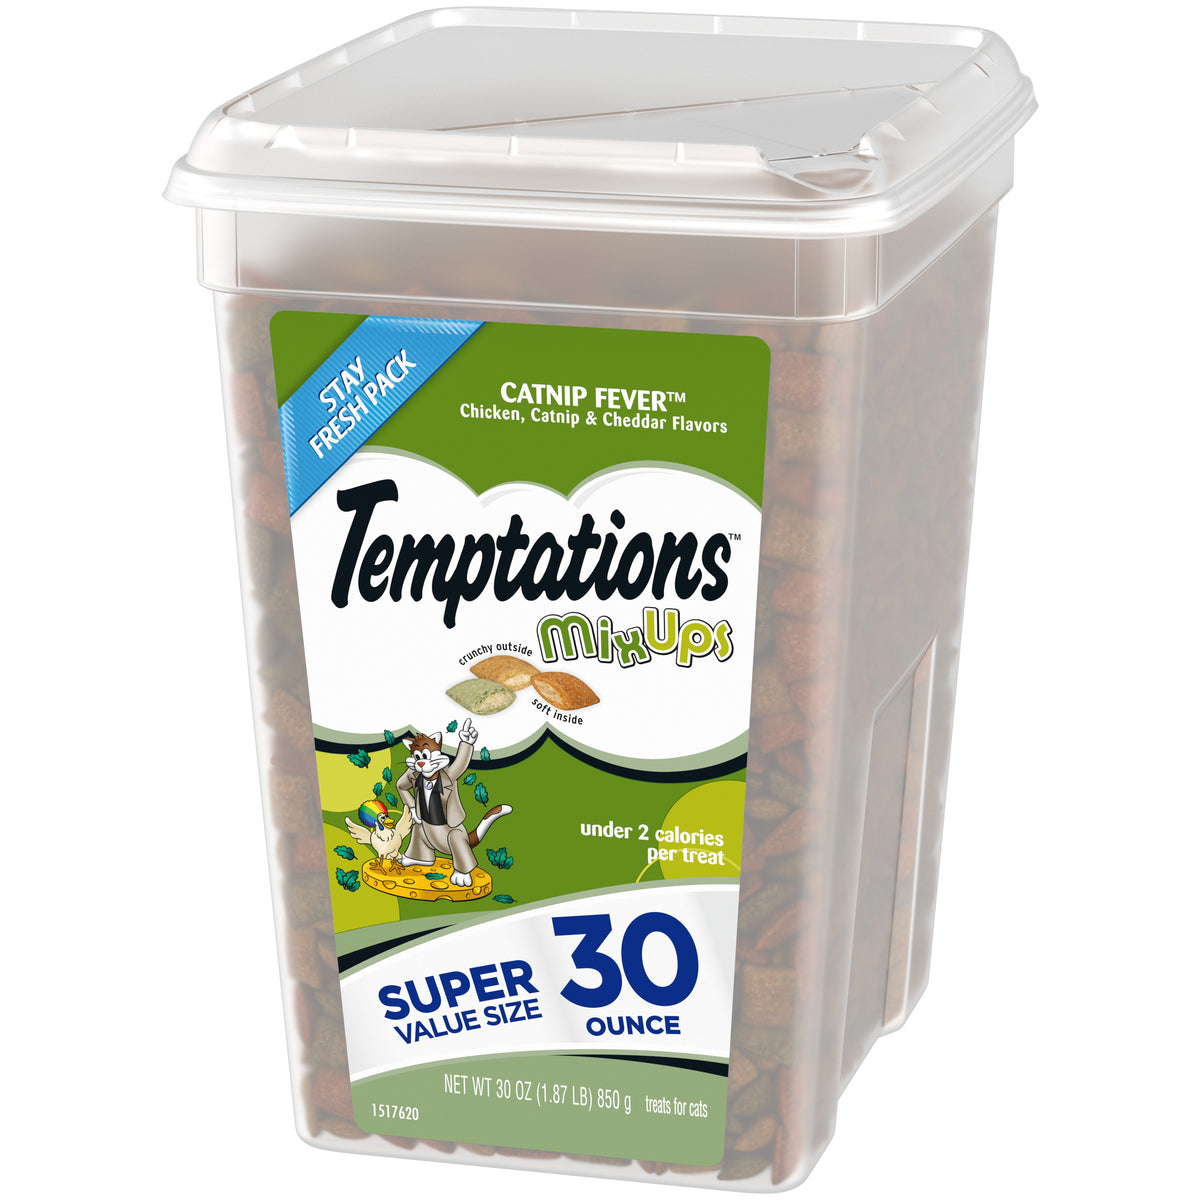 [Temptations][TEMPTATIONS MIXUPS Crunchy and Soft Cat Treats Catnip Fever Flavor, 30 oz. Tub][Image Center Right (3/4 Angle)]